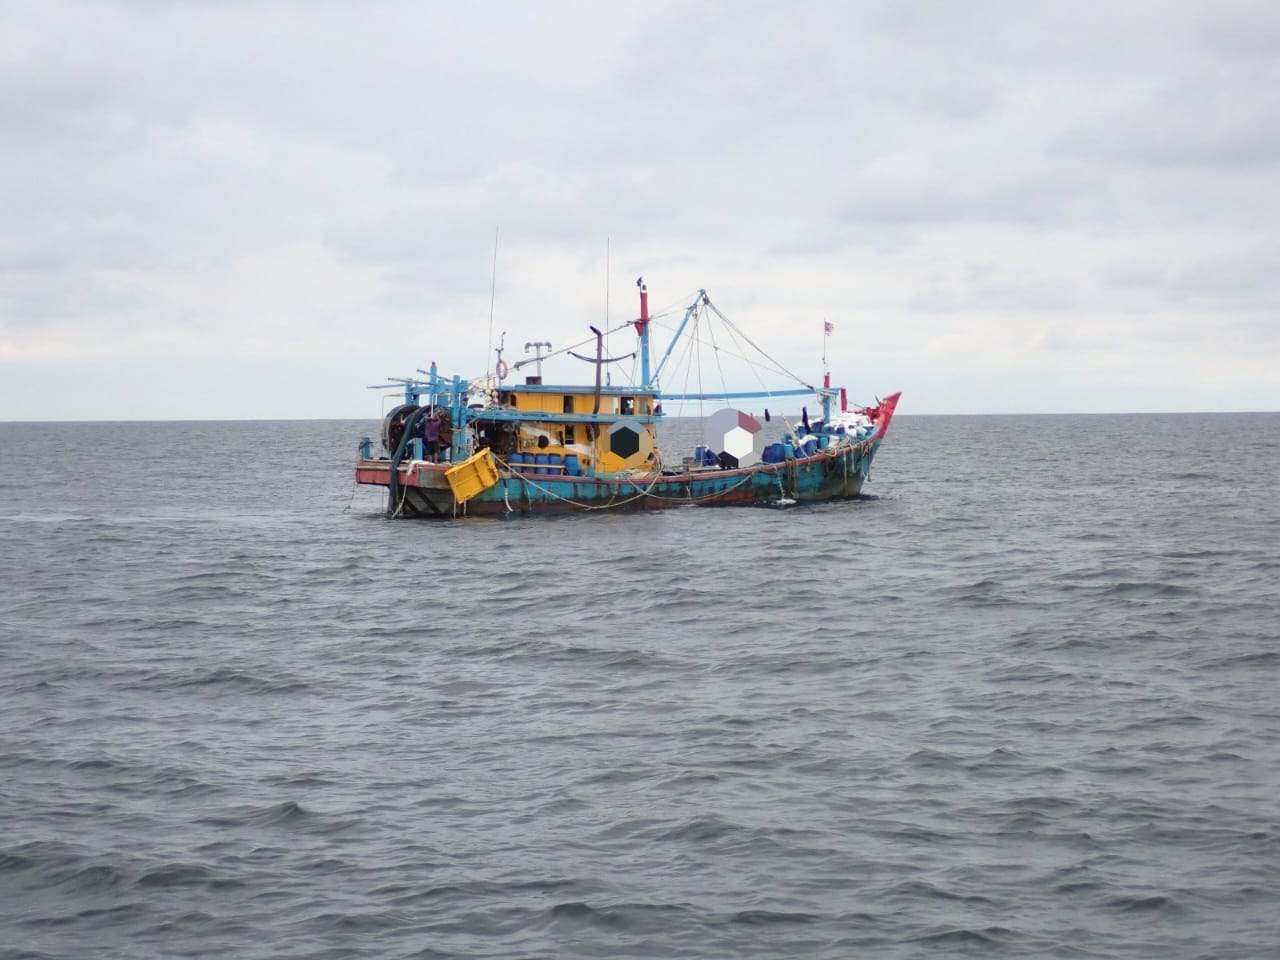 nelayan myanmar perairan perak bot nelayan maritim malaysia Lumut Perak nelayan myanmar perairan perak bot nelayan maritim malaysia Lumut Perak nelayan myanmar perairan perak bot nelayan maritim malaysia Lumut Perak